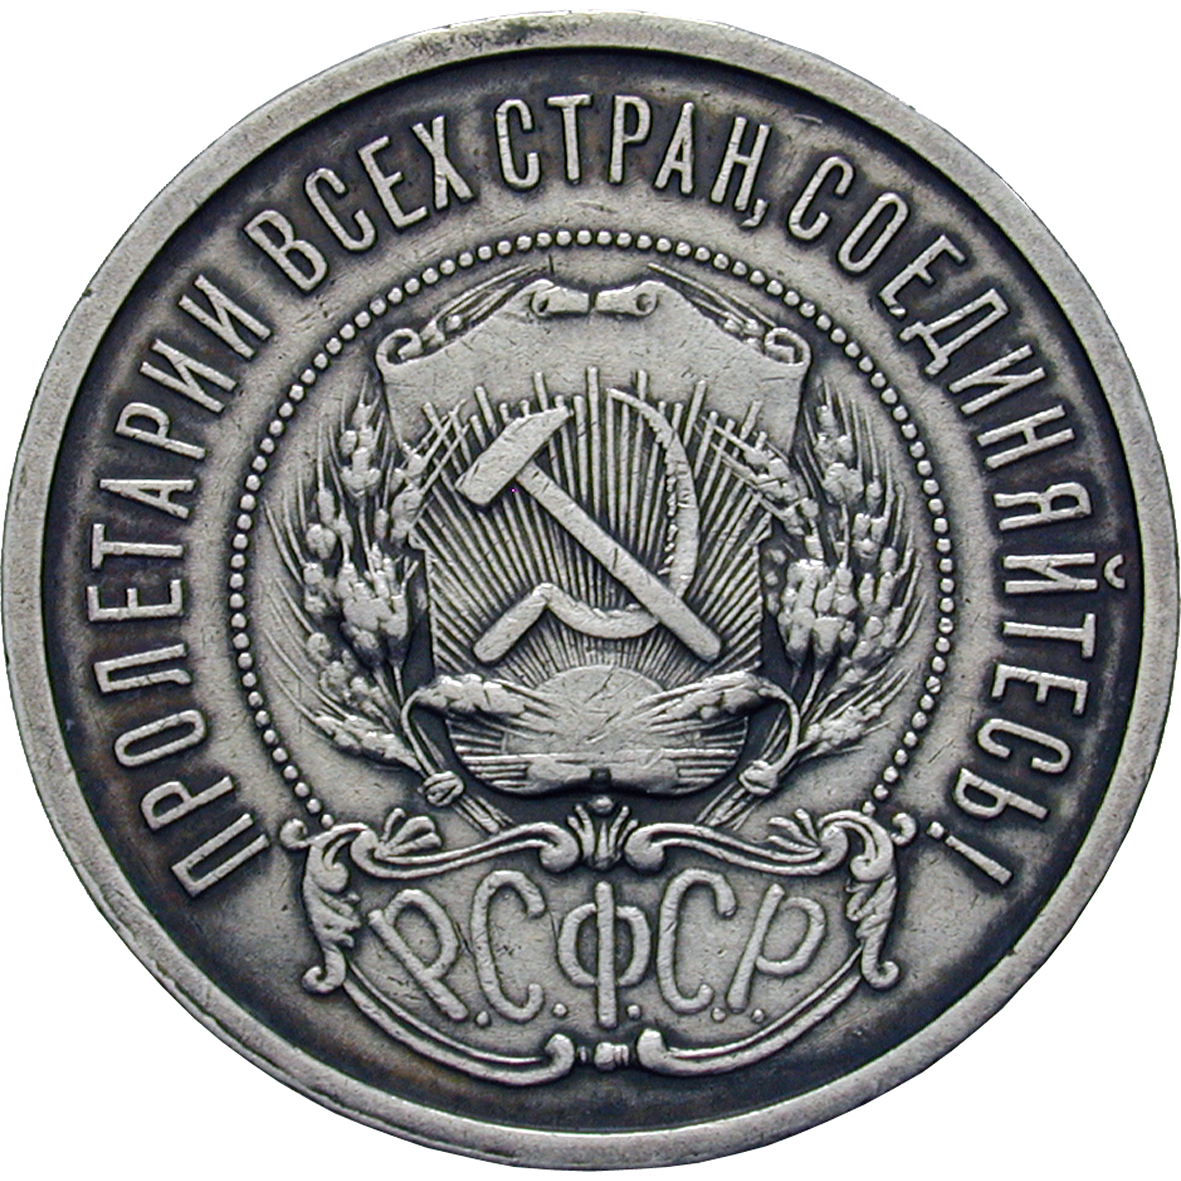 Russian Soviet Federative Socialist Republic, 50 Kopecks 1921 (obverse)